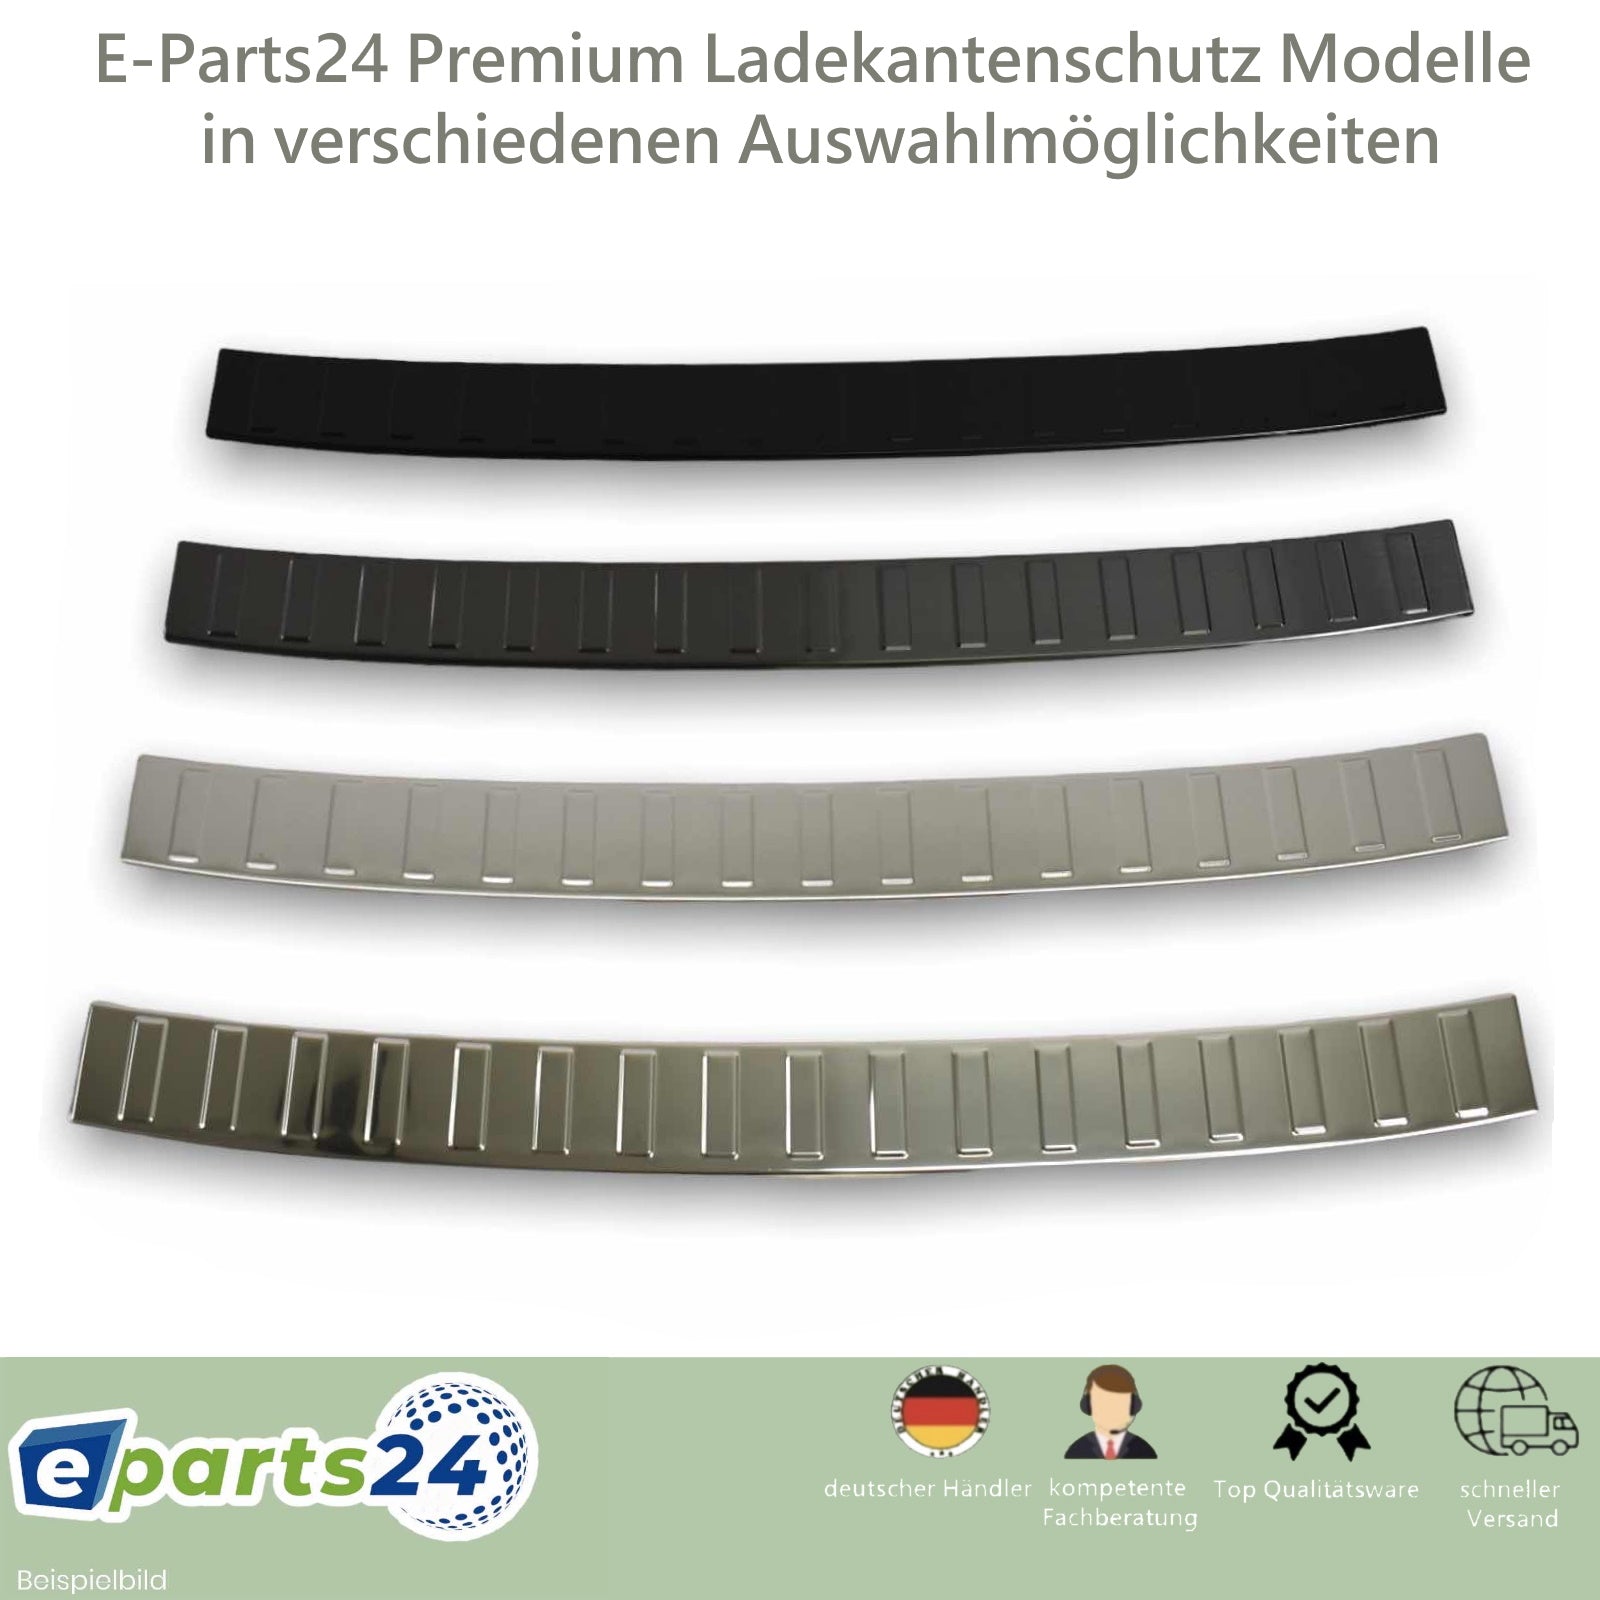 C Edelstahl Zafira E-Parts24 gebürste Opel – Ladekantenschutz Tourer für 2011-2019